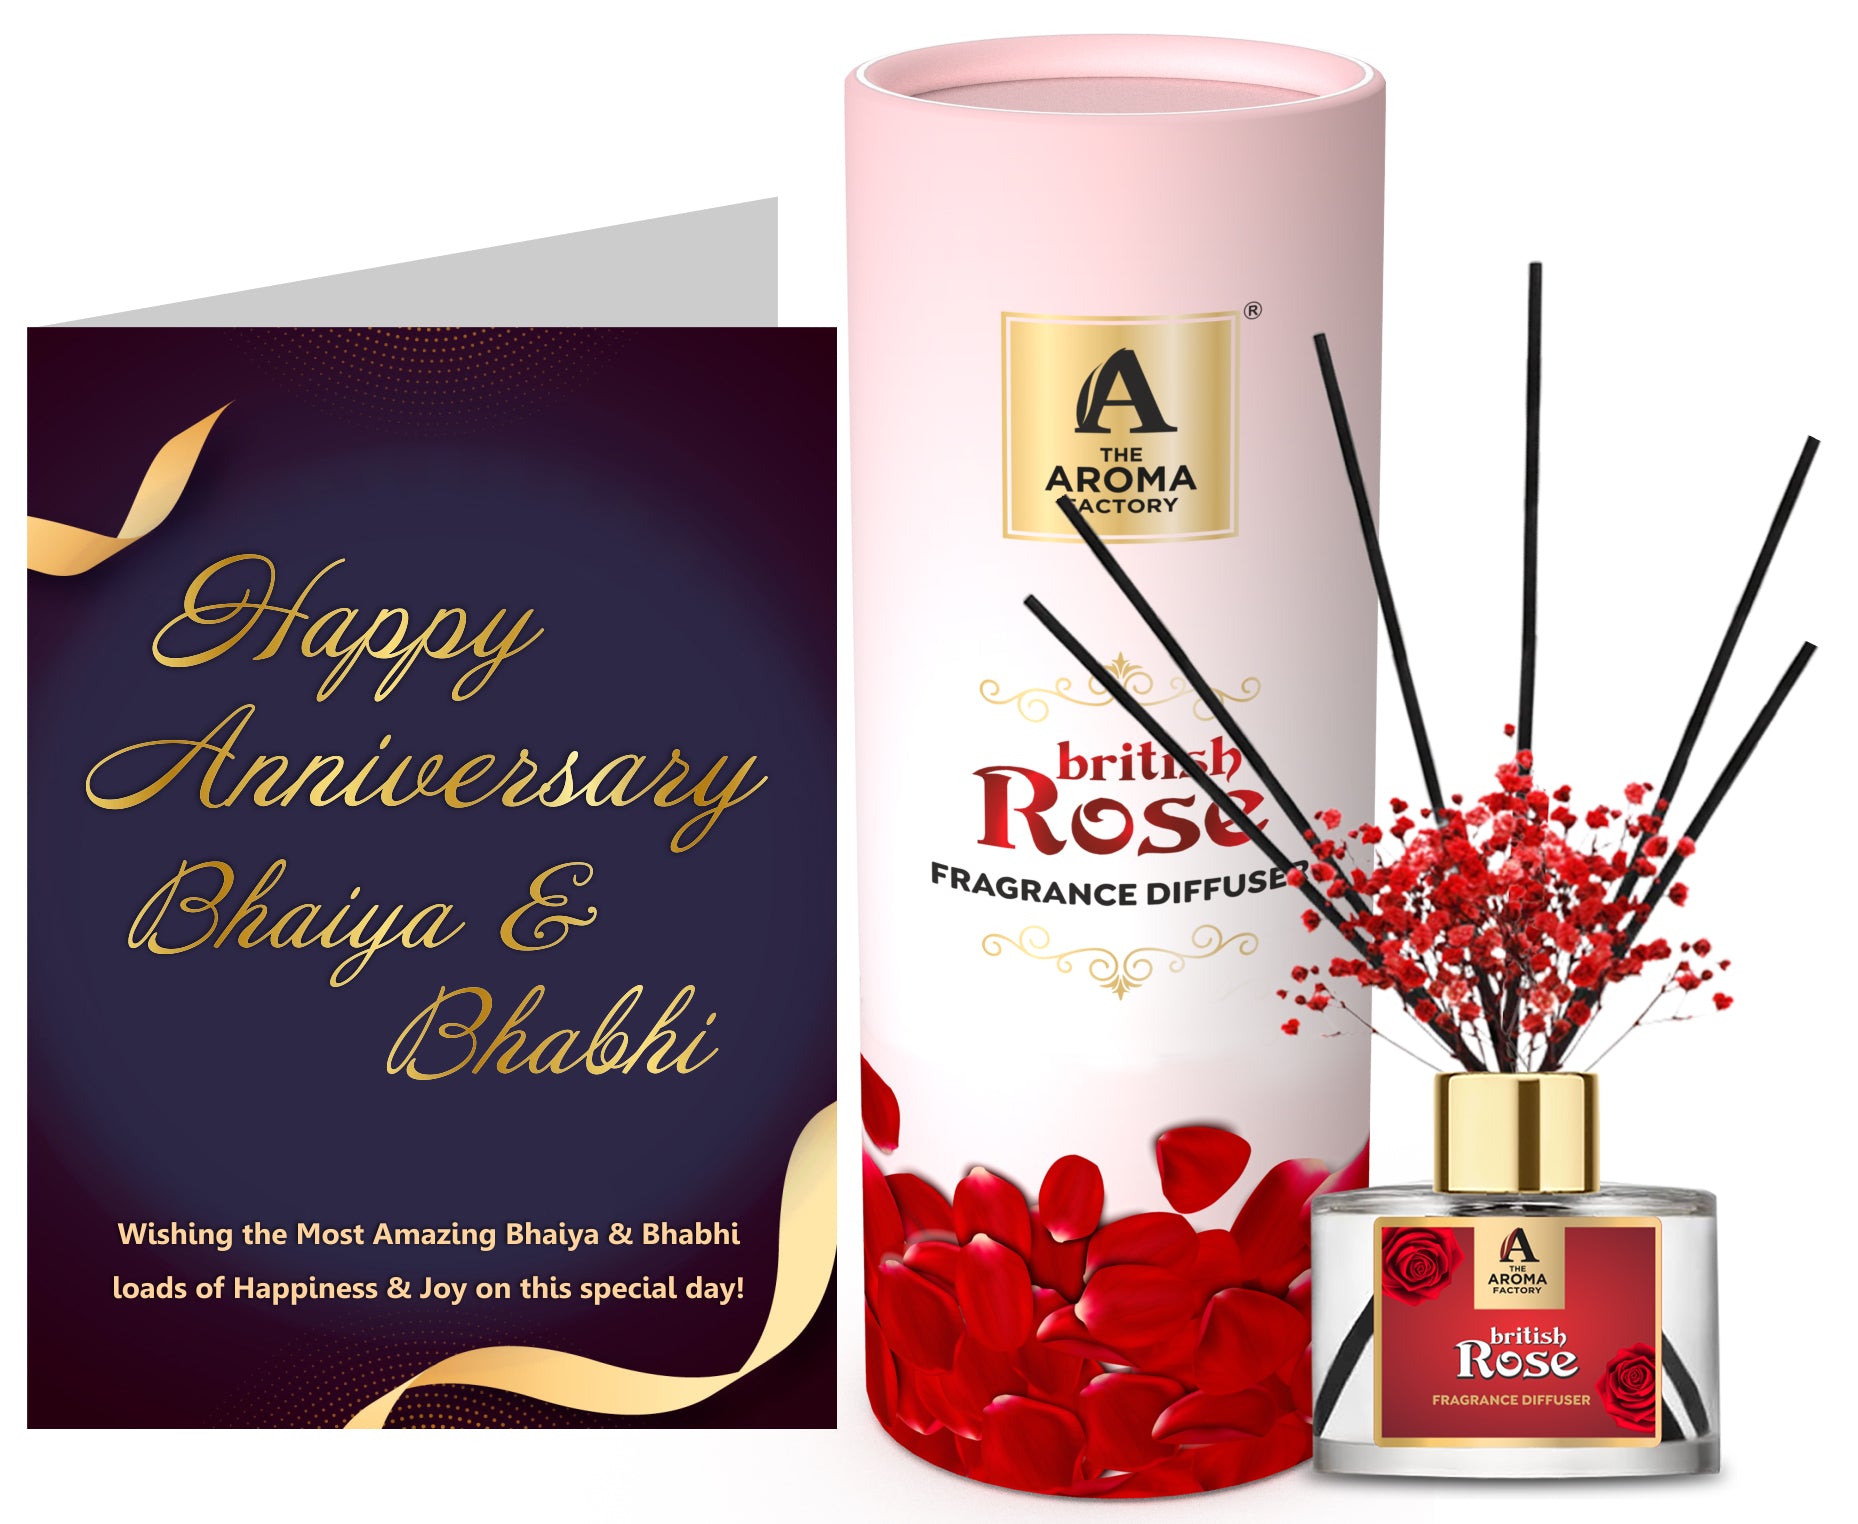 The Aroma Factory Happy Anniversary Bhaiya Bhabhi Gift with Card, British Rose Fragrance Reed Diffuser Set (1 Box + 1 Card)